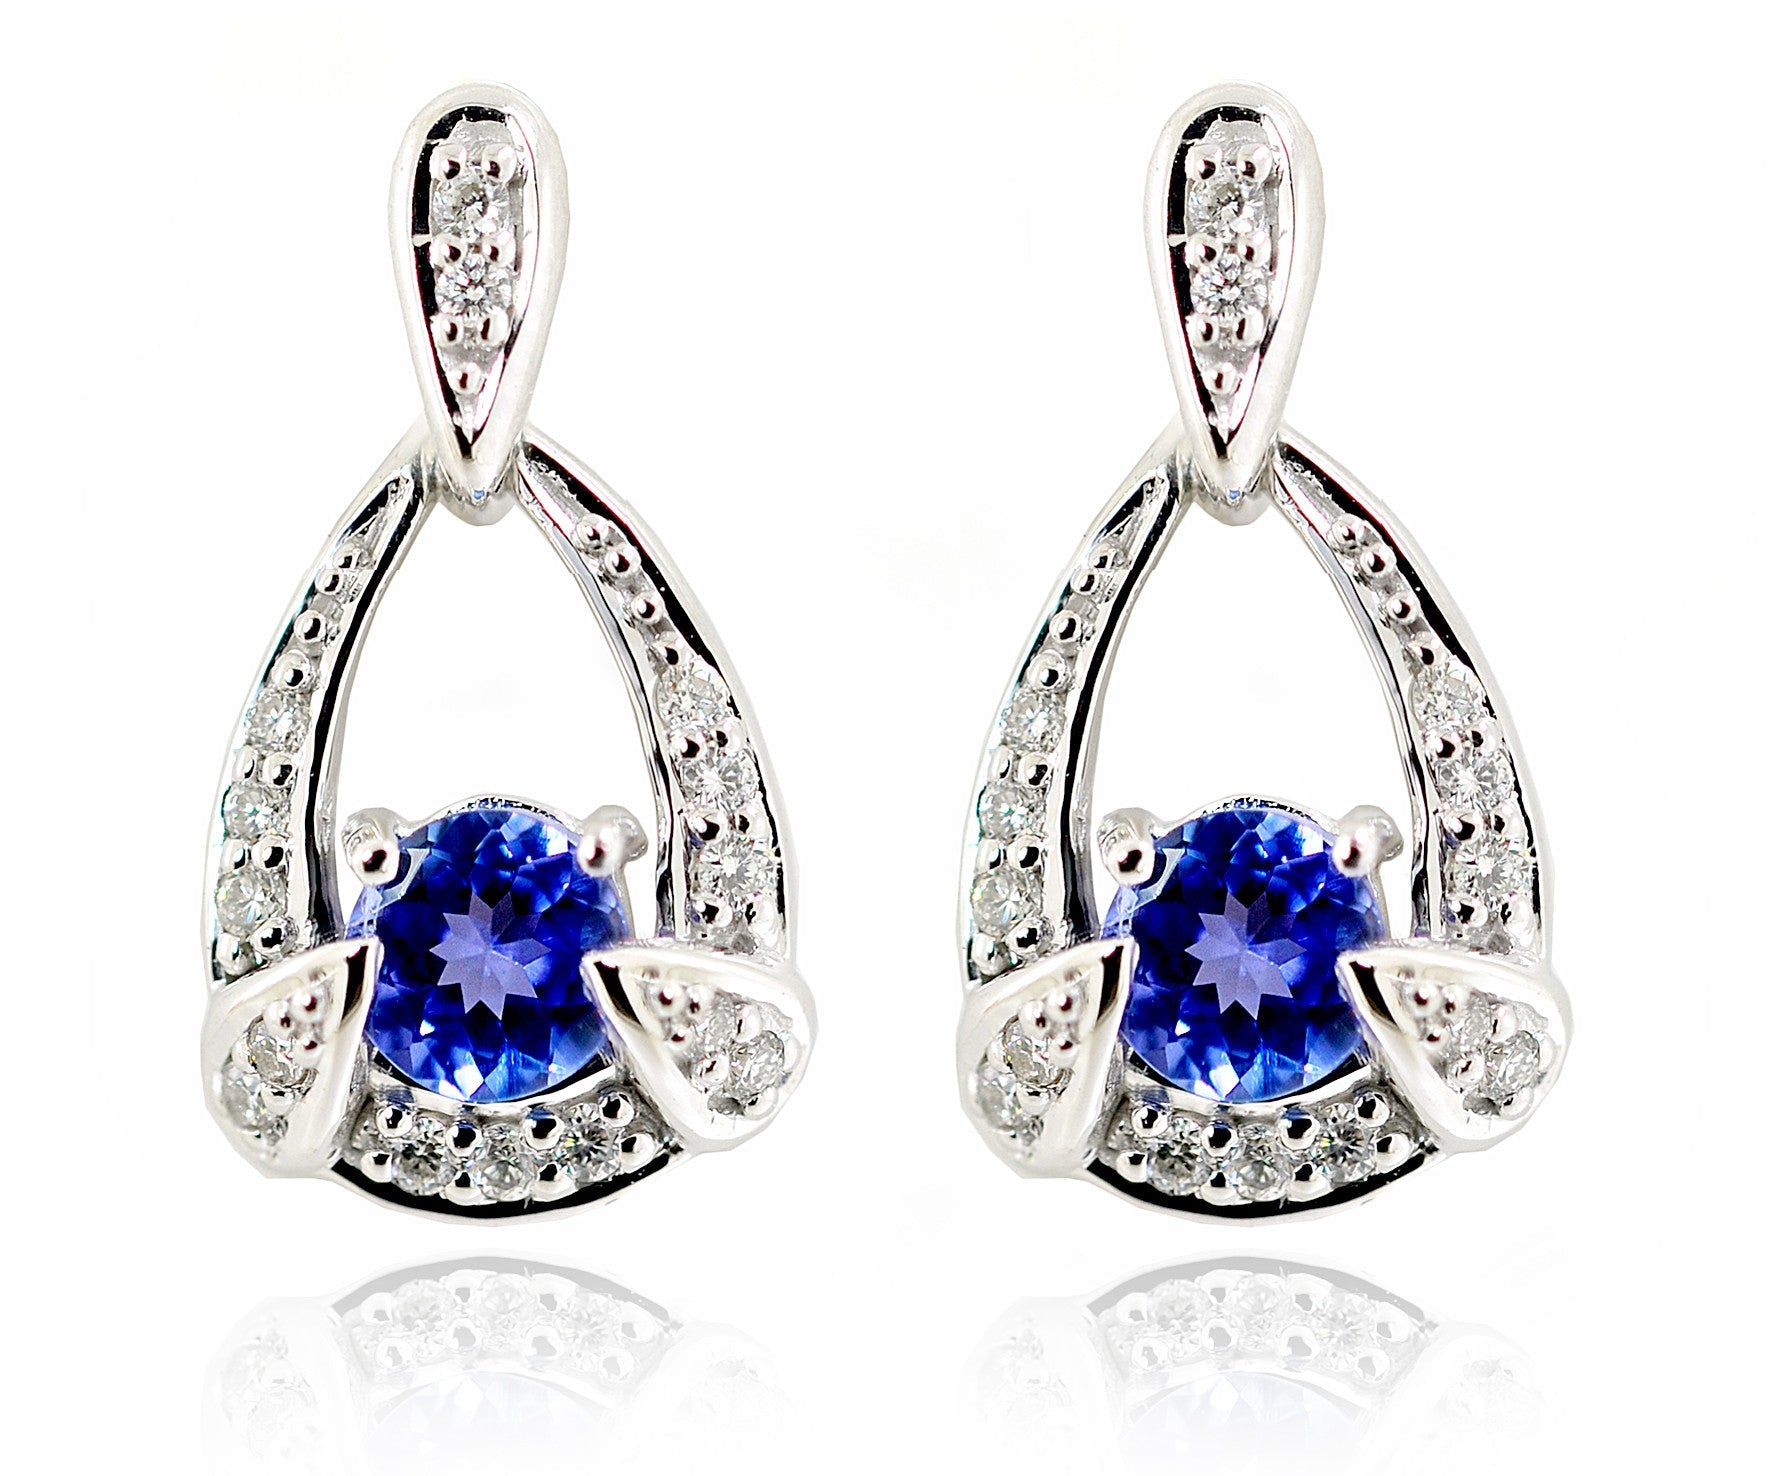 9ct White gold round Tanzanite earrings with diamonds - ForeverJewels Design Studio 8